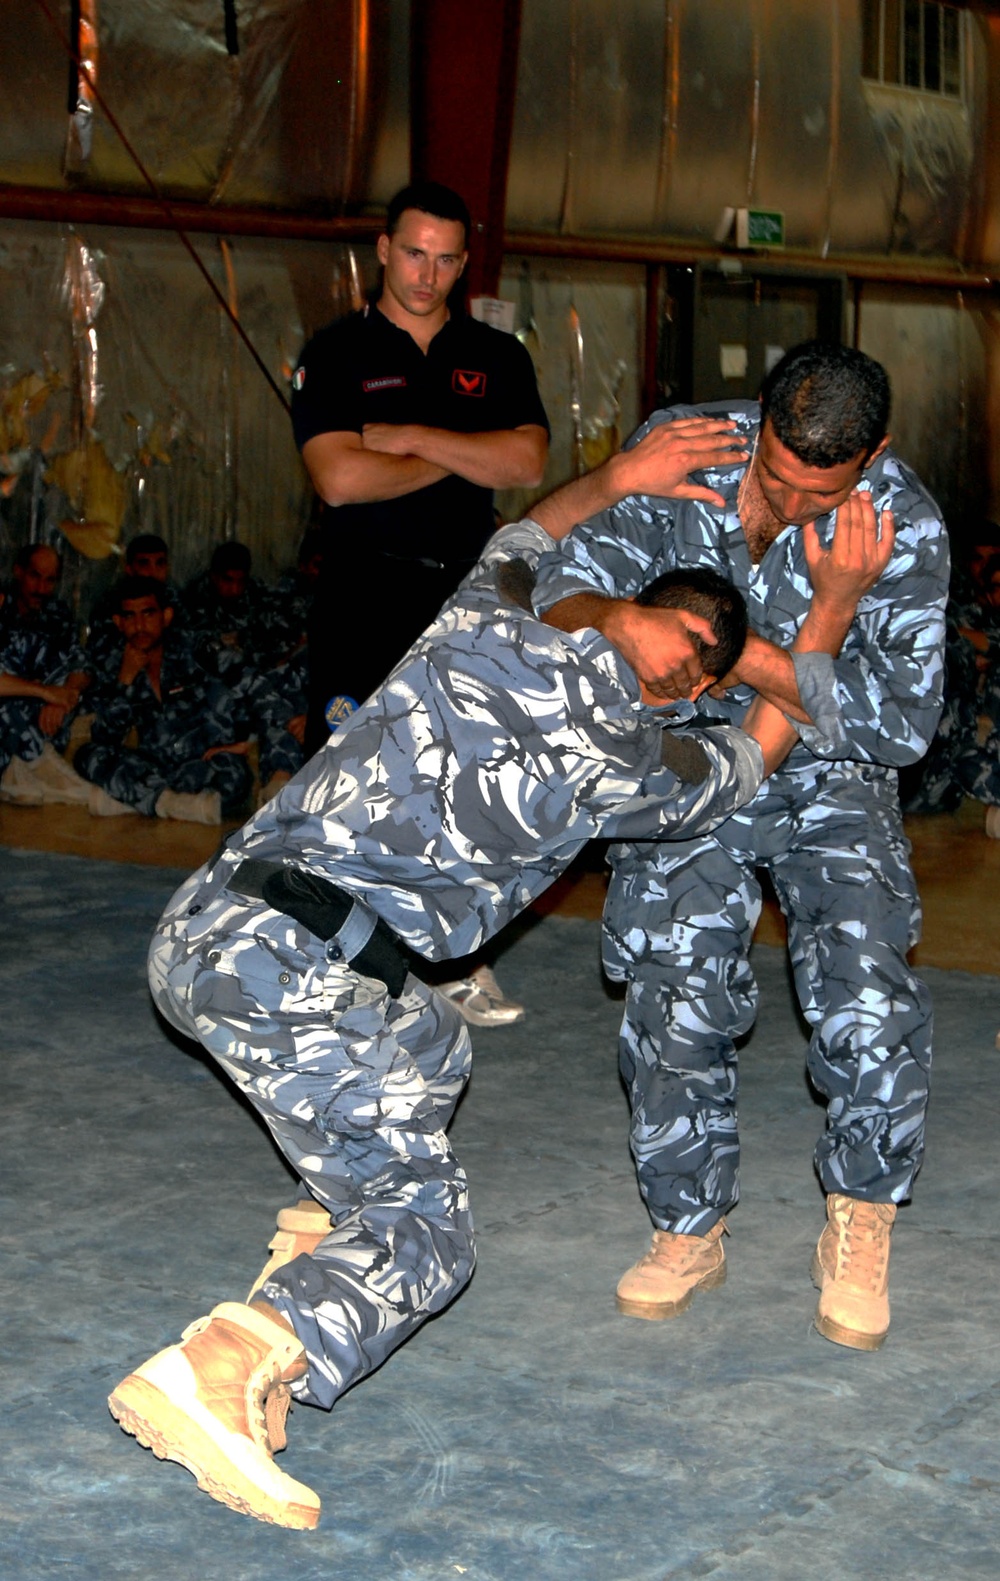 Iraq Oil Police training at Camp Dublin